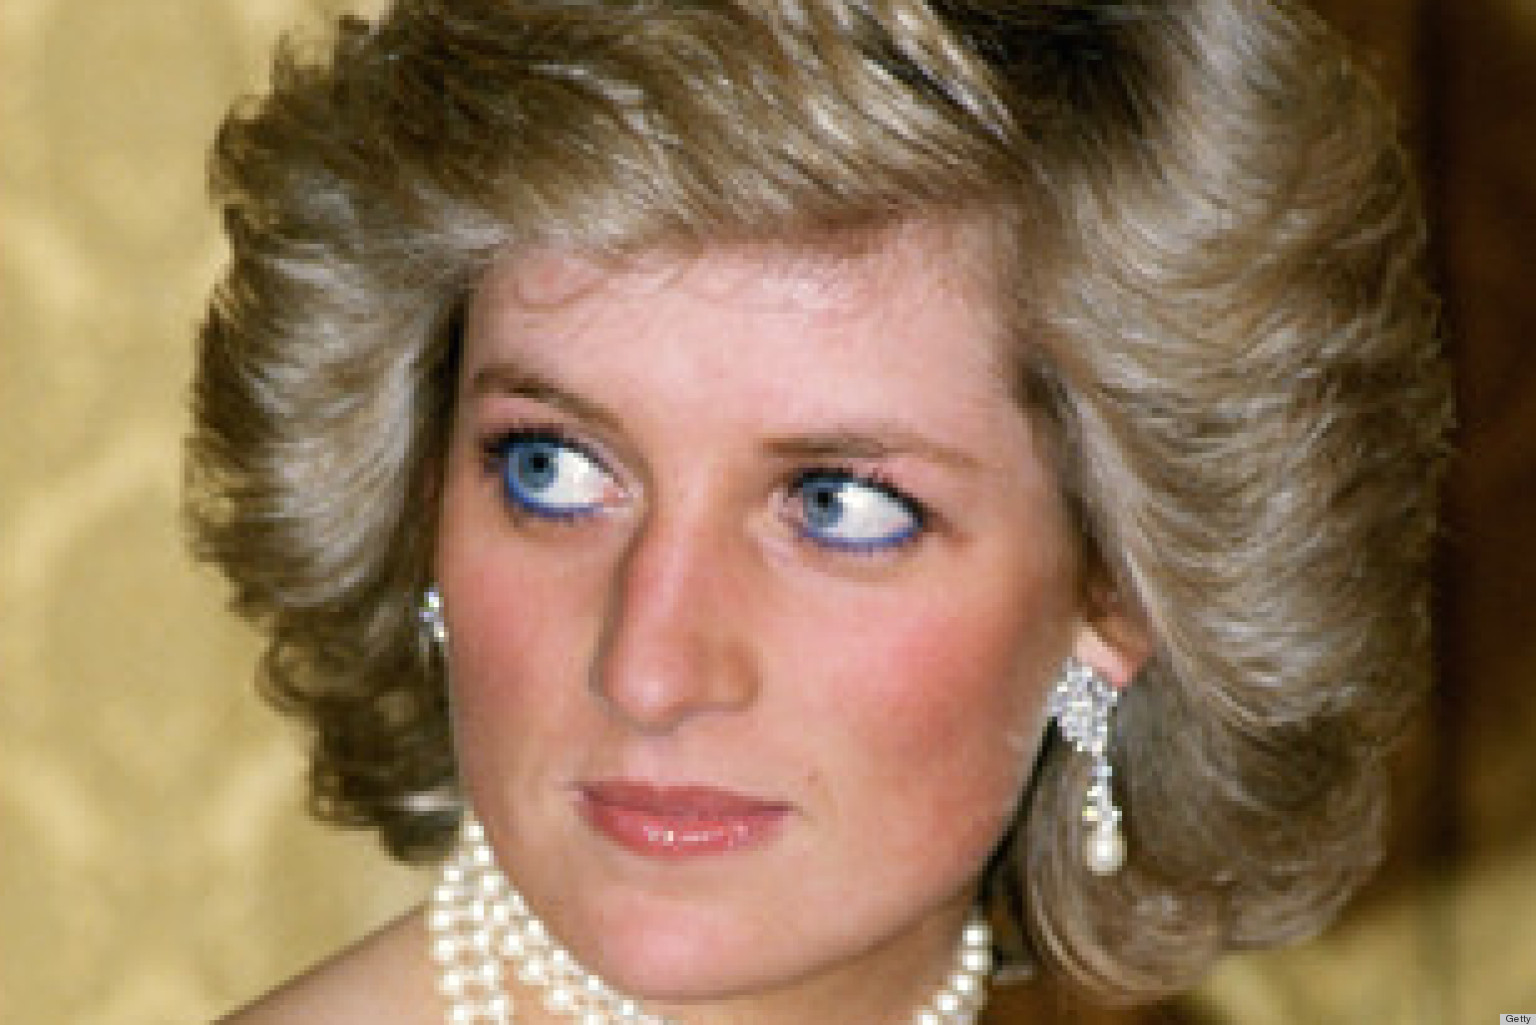 Princess Diana U2 Met In A London Makeup Shop In The 80s Huffpost